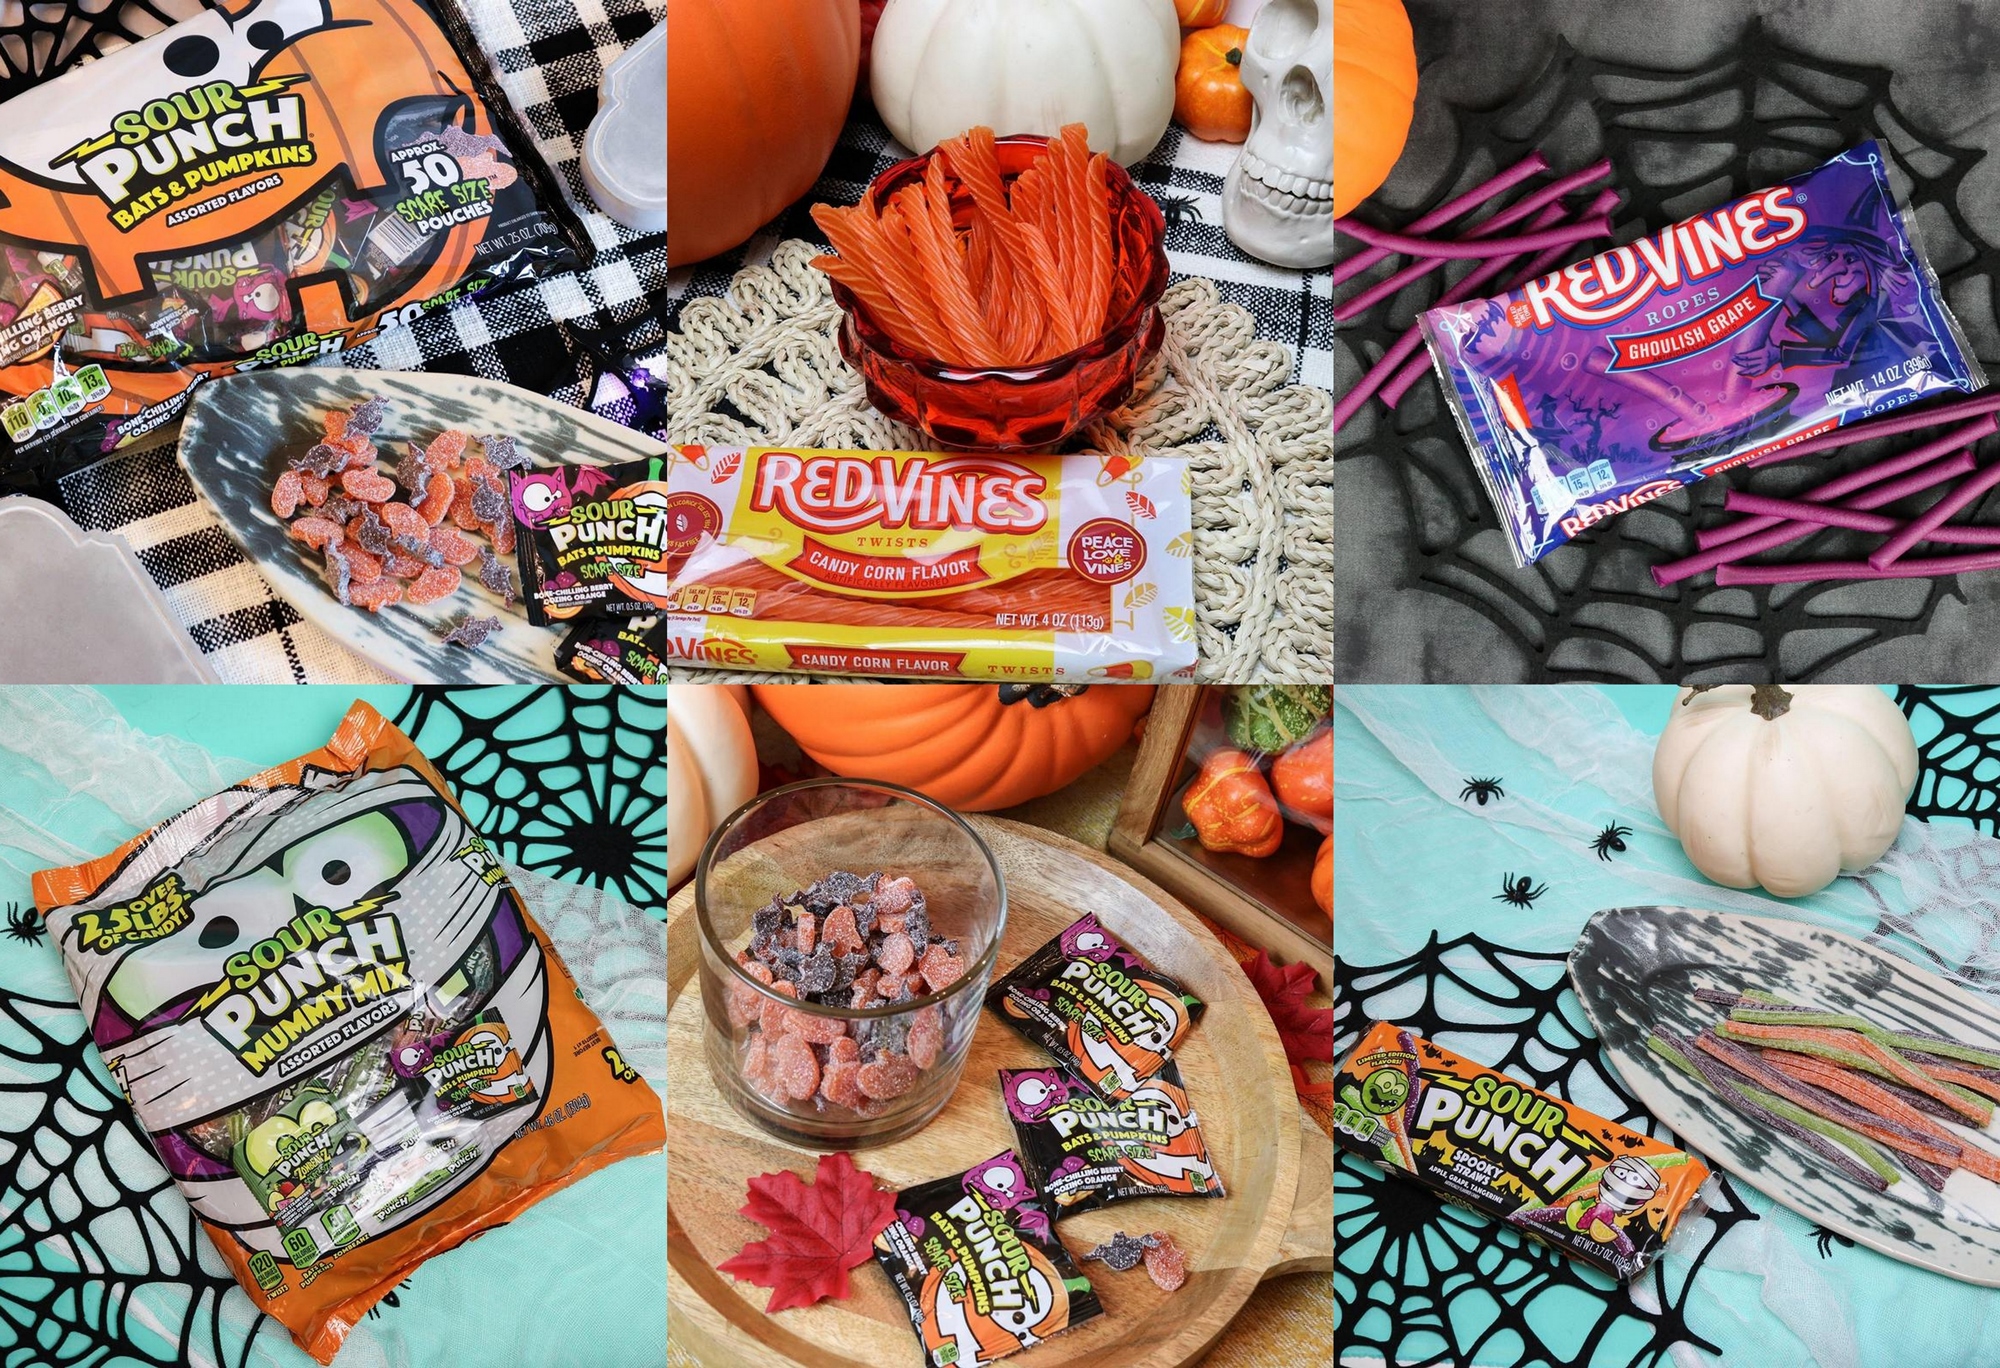 https://mylifeonandofftheguestlist.com/wp-content/uploads/2021/10/Sour-Punch-Red-Vines-Debuts-Spook-tacular-New-Candy-for-Halloween_www.mylifeonandofftheguestlist.jpg